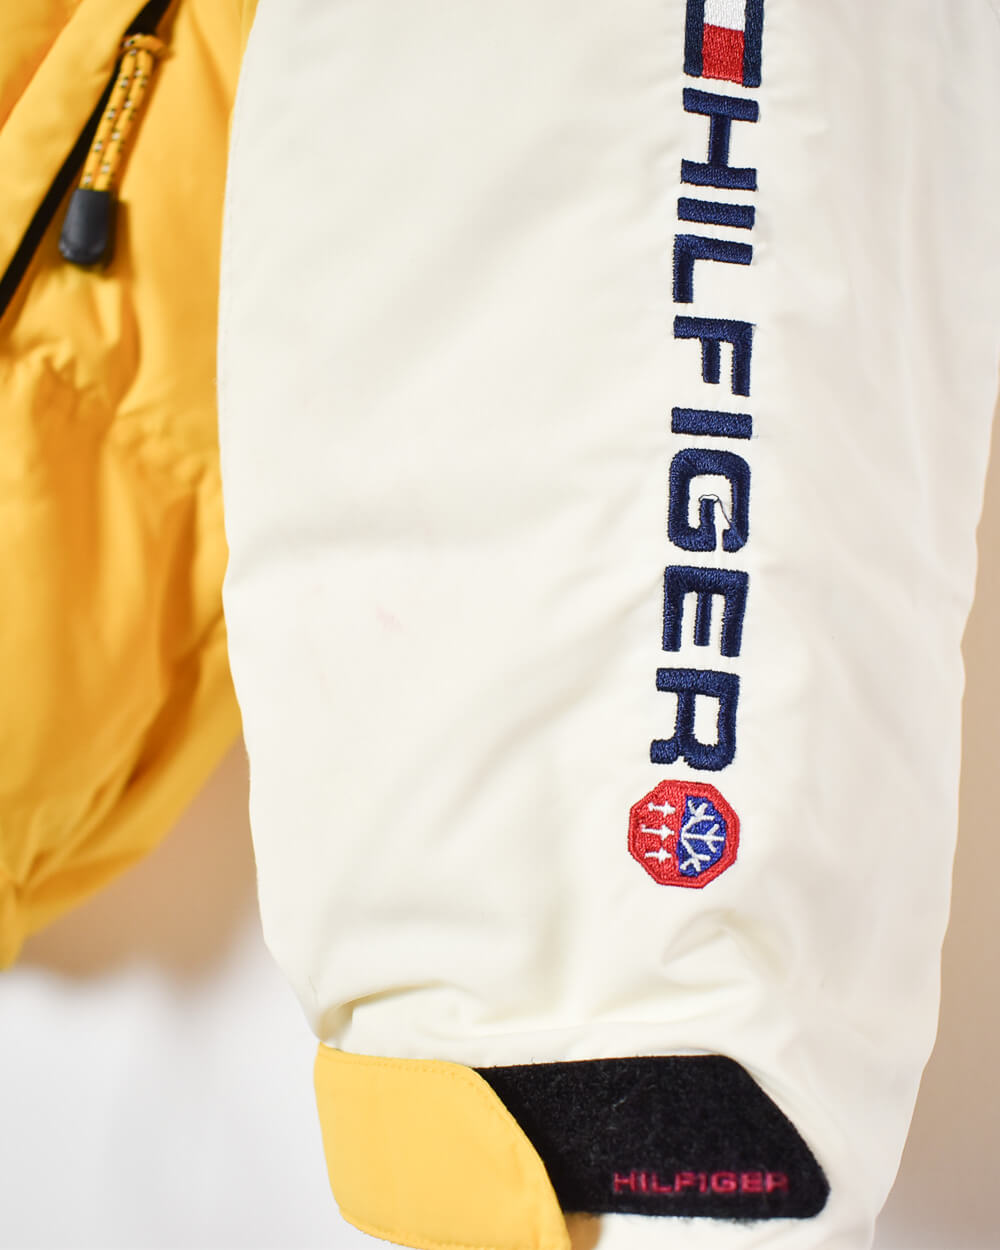 Navy Tommy Hilfiger Puffer Jacket  - Large